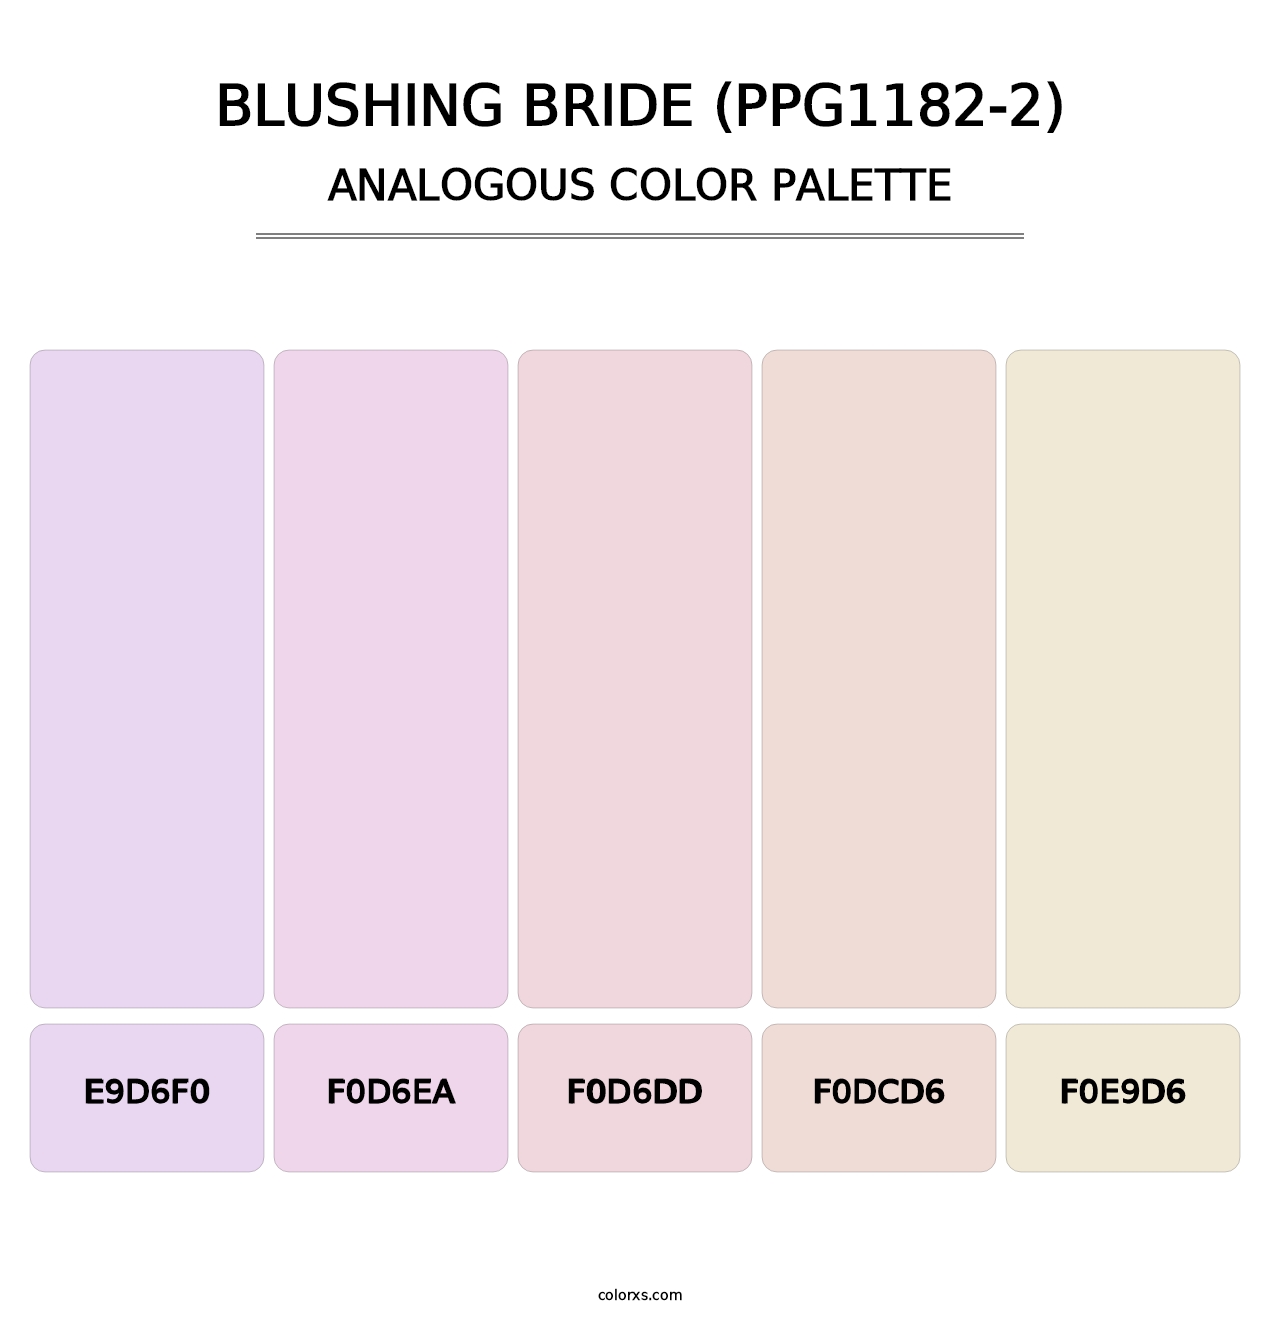 Blushing Bride (PPG1182-2) - Analogous Color Palette